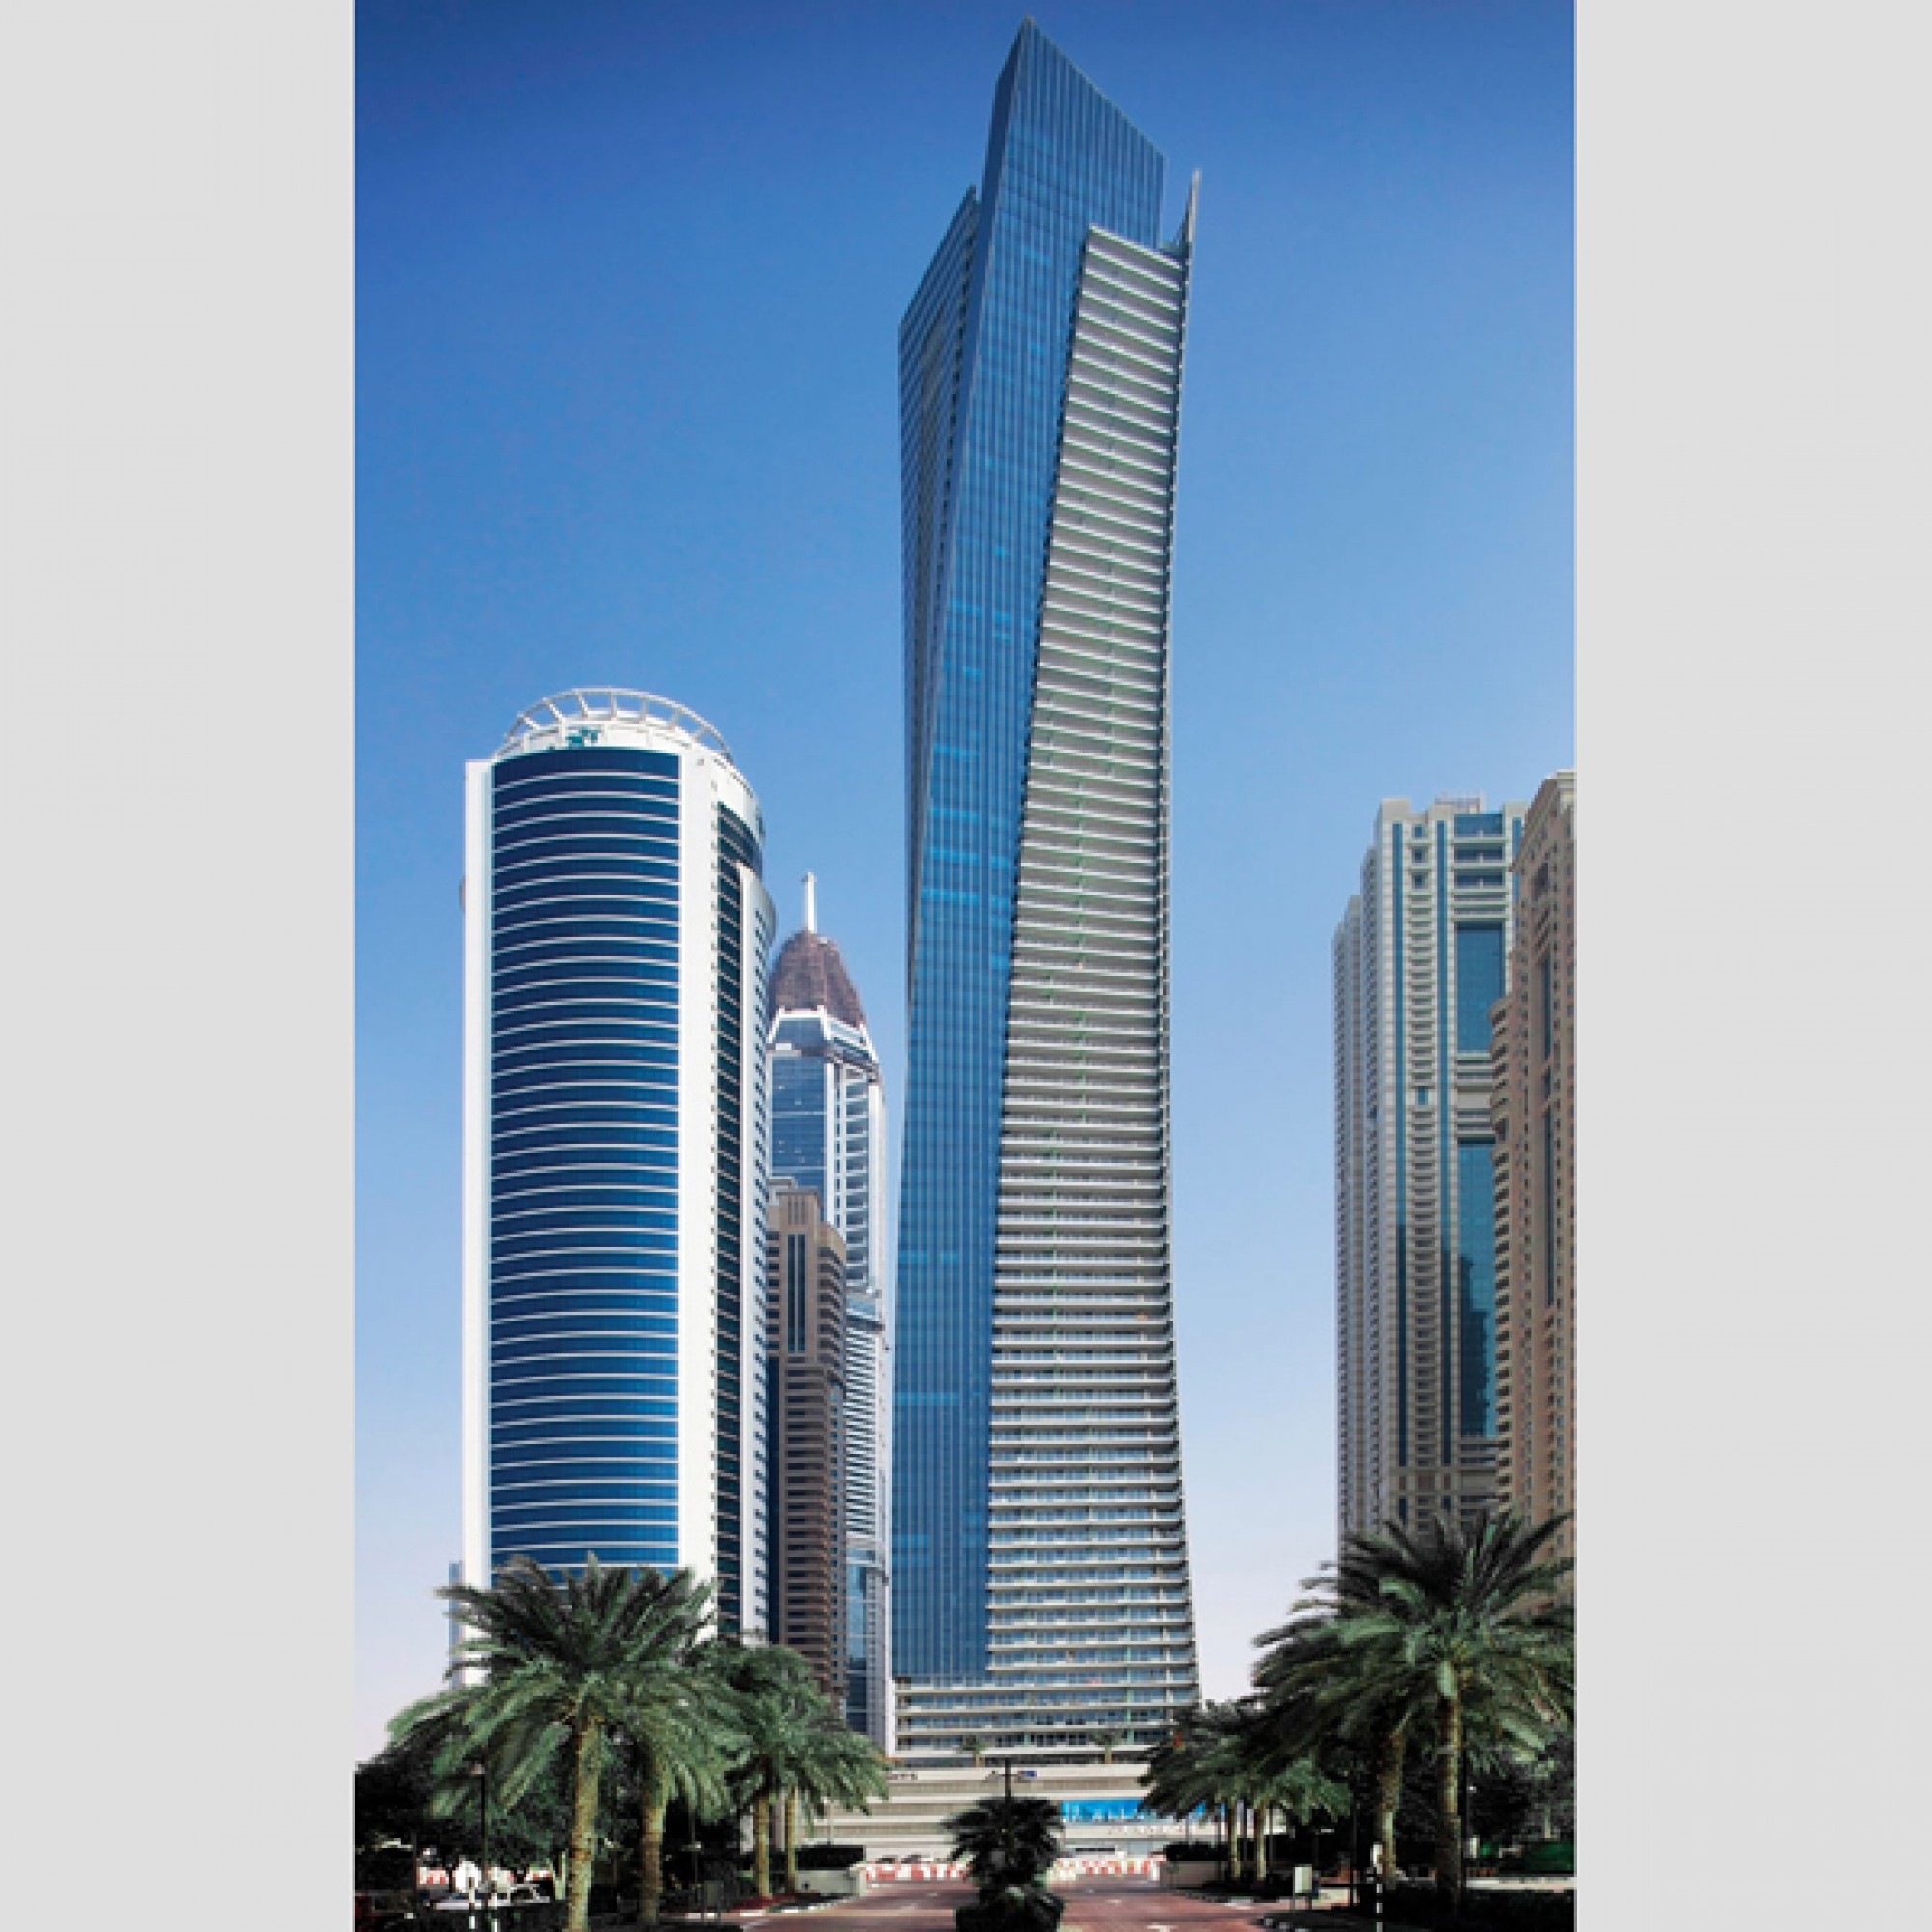  Rang 4, Ocean Heights, Dubai, Vereinigte Arabische Emirate, fertigestellt 2010,  310 Meter hoch, 83 Stockwerke, Rotation total 40 Grad, Rotation pro Etage 0.482 Grad. (AEDAS, CC BY-SA 2.0, Wikimedia) 